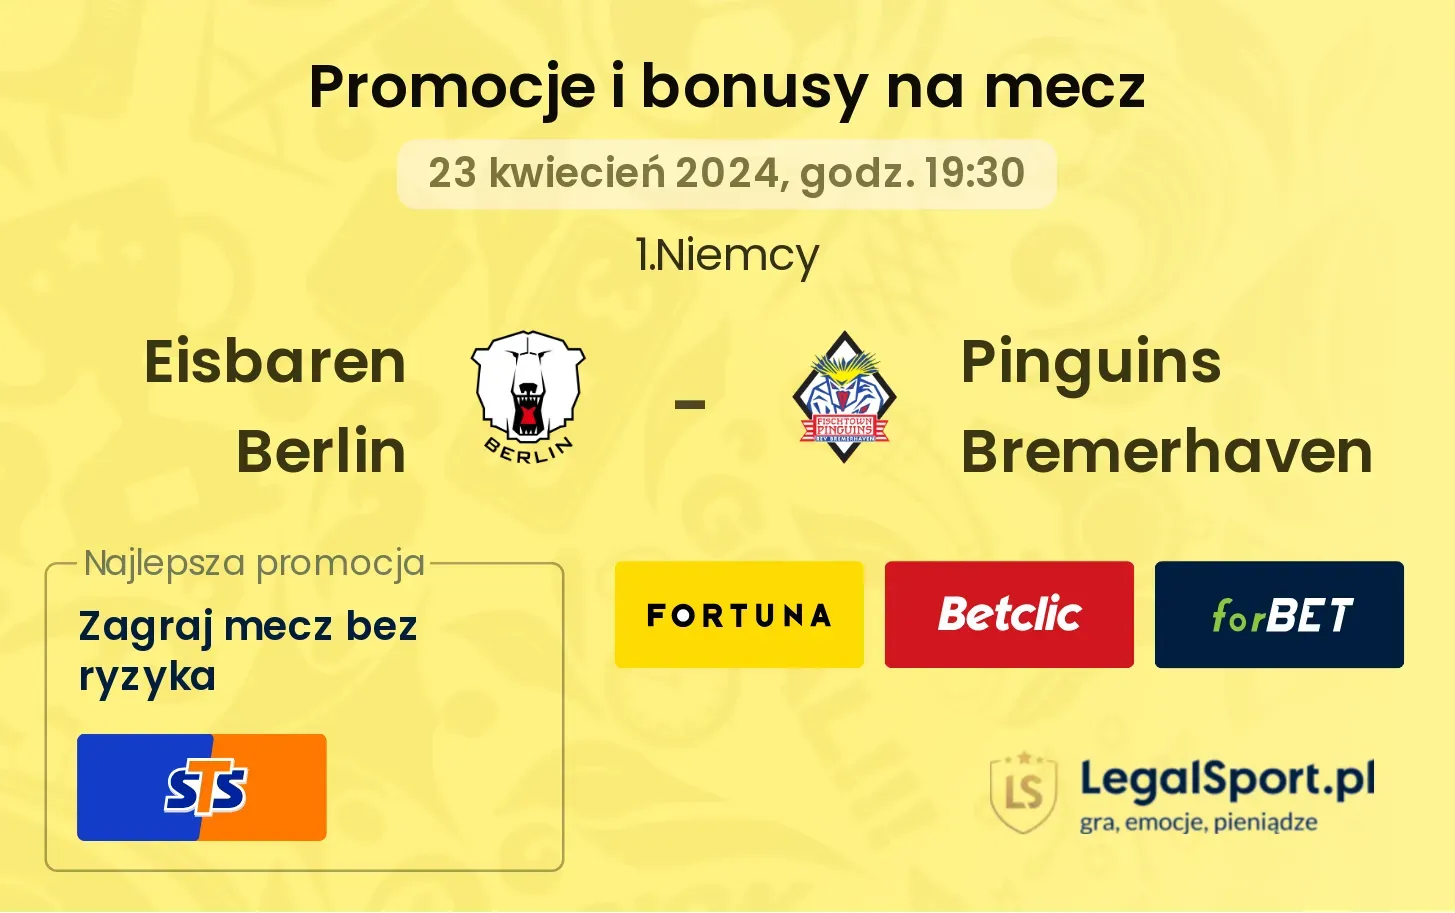  Eisbaren Berlin - Pinguins Bremerhaven promocje bonusy na mecz